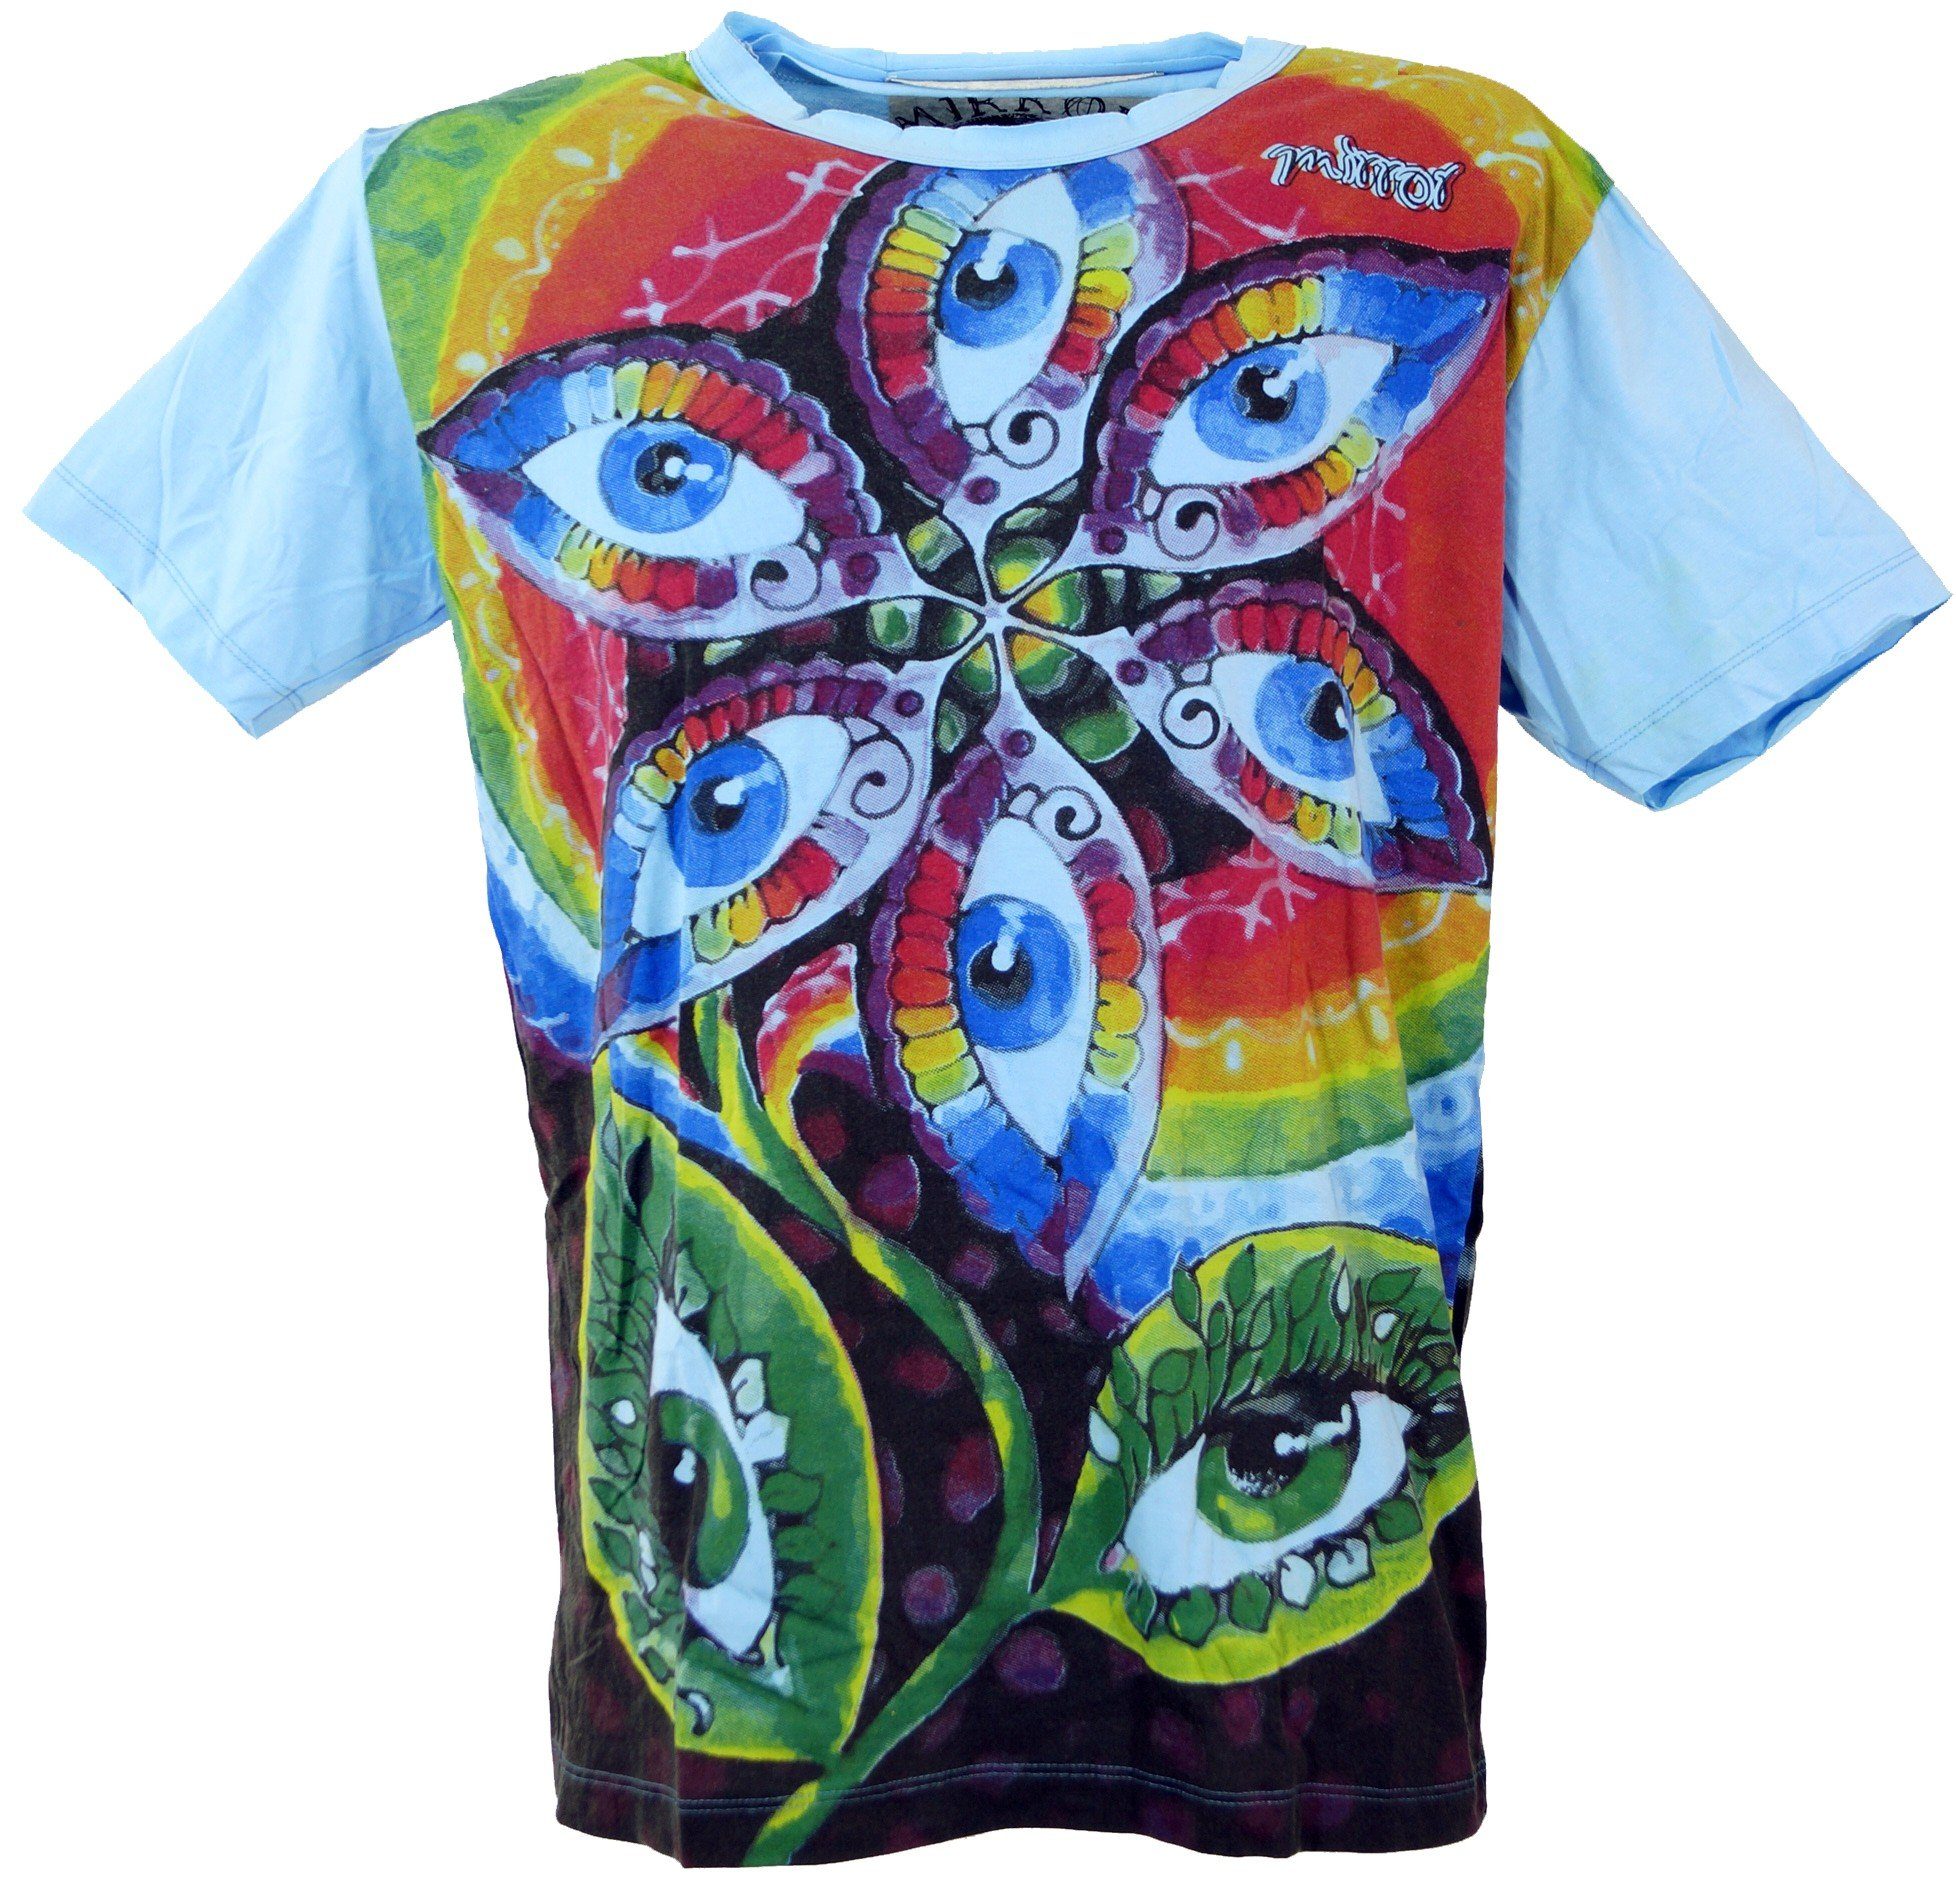 Guru-Shop T-Shirt Mirror T-Shirt Style, Auge hellblau - Goa Auge Festival, alternative Drittes hellblau Bekleidung / Drittes